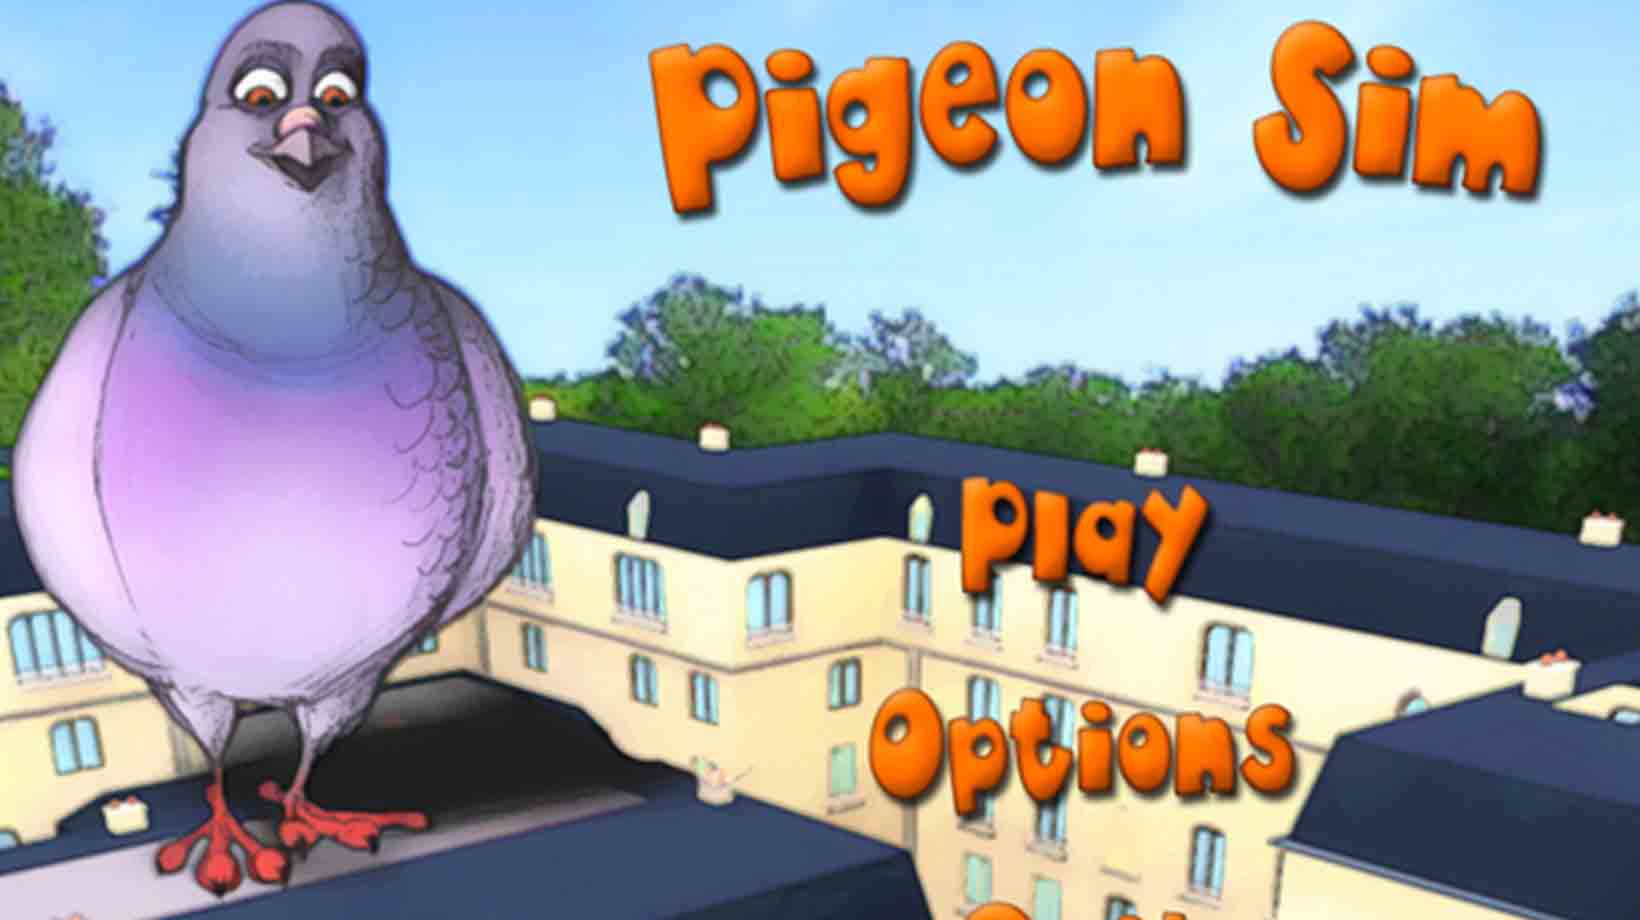 pigeon-sim